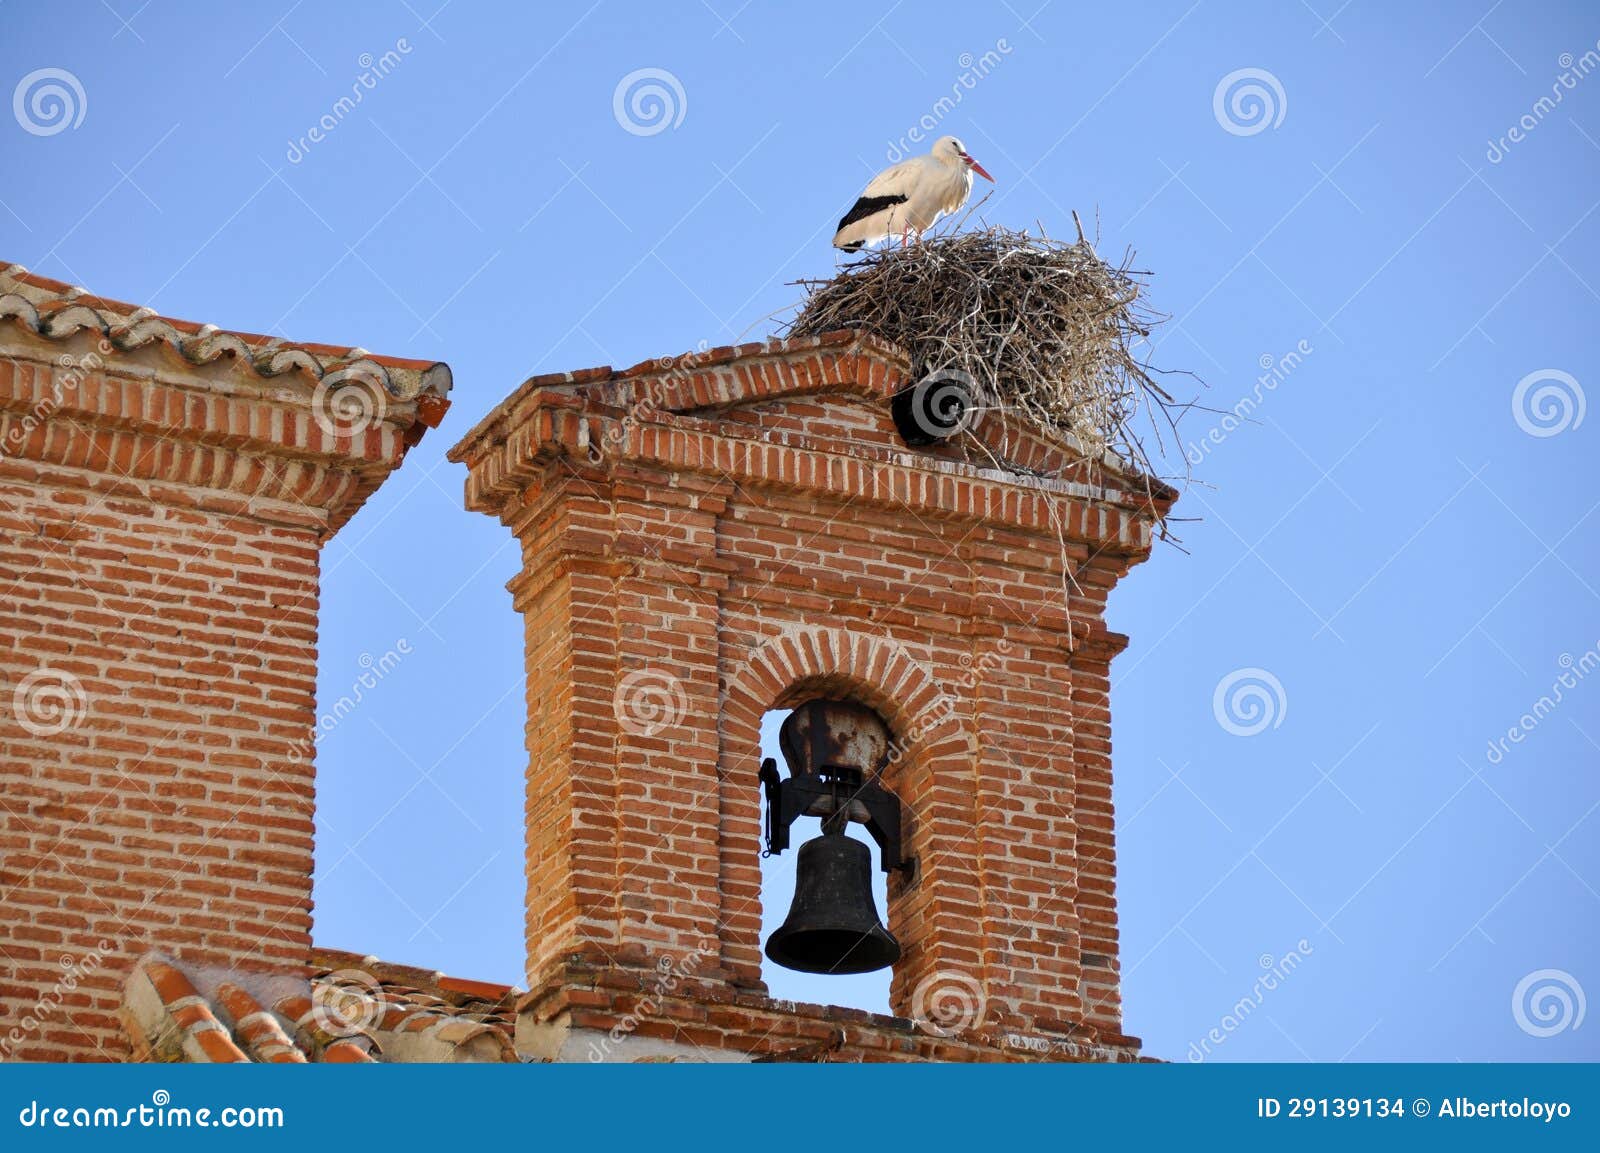 white stork on a belfry, alcala de henares, madrid (spain)